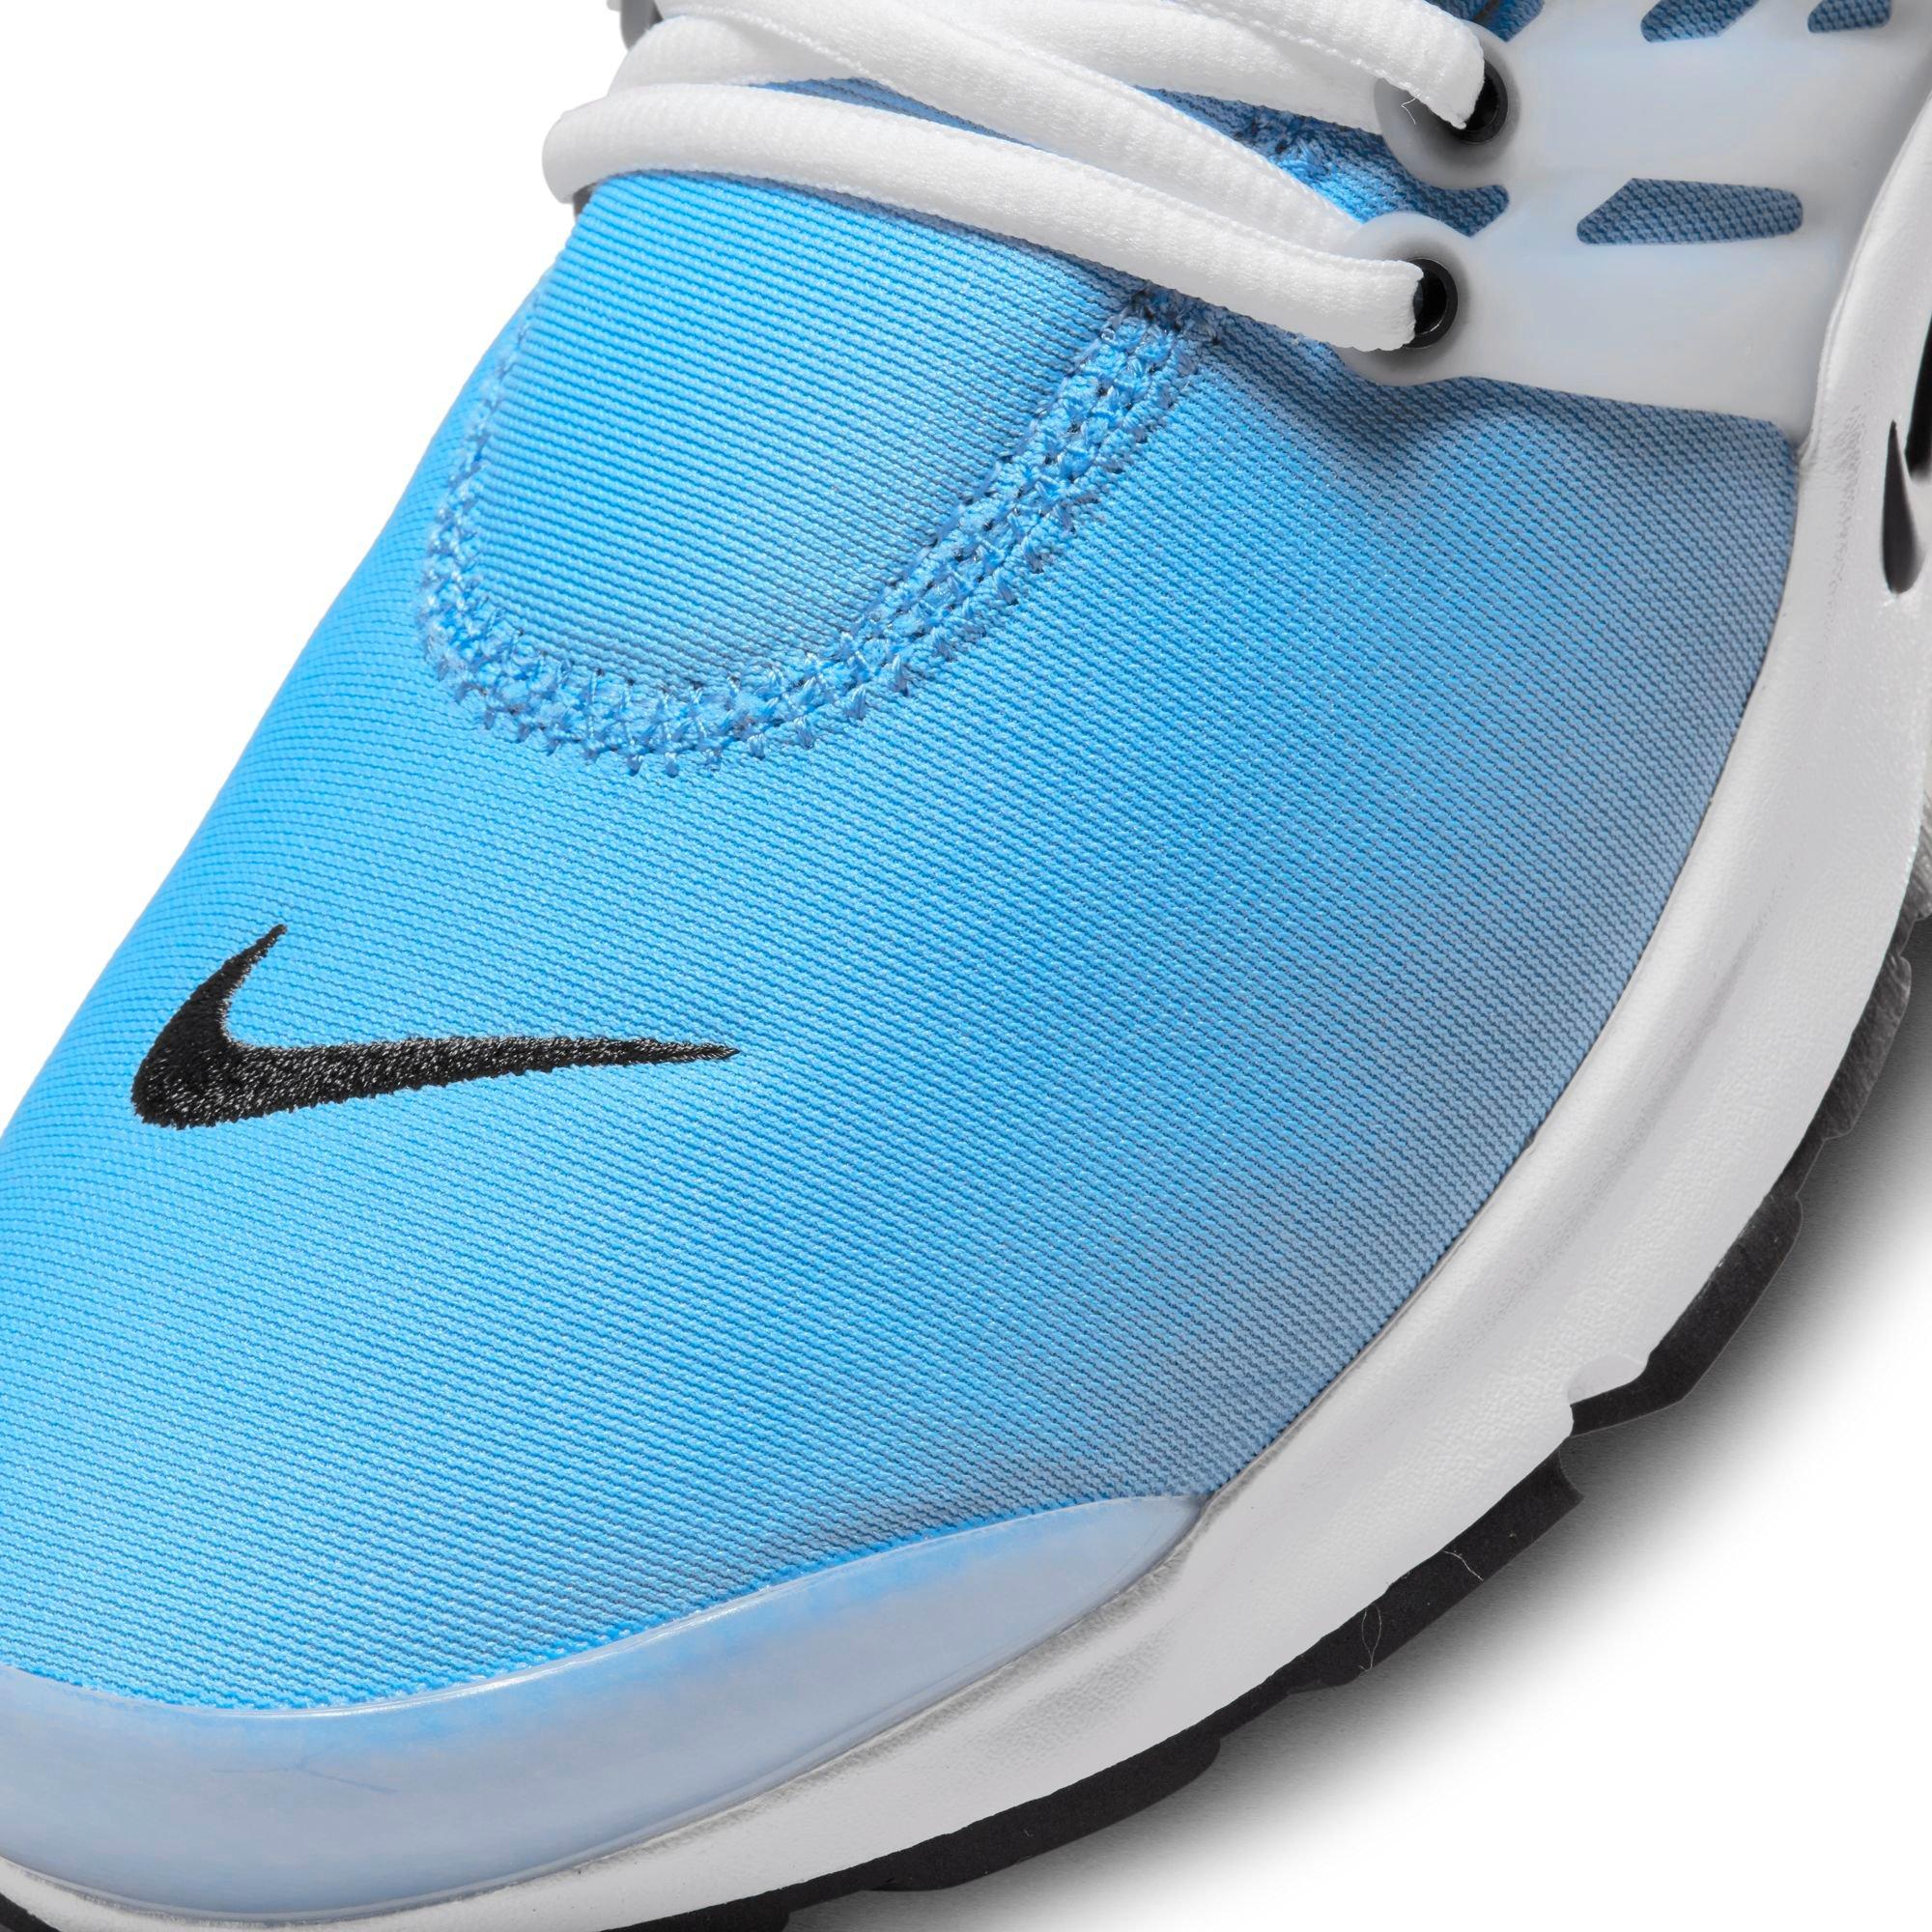 Nike Air Presto "University Blue/Black/White" Shoe